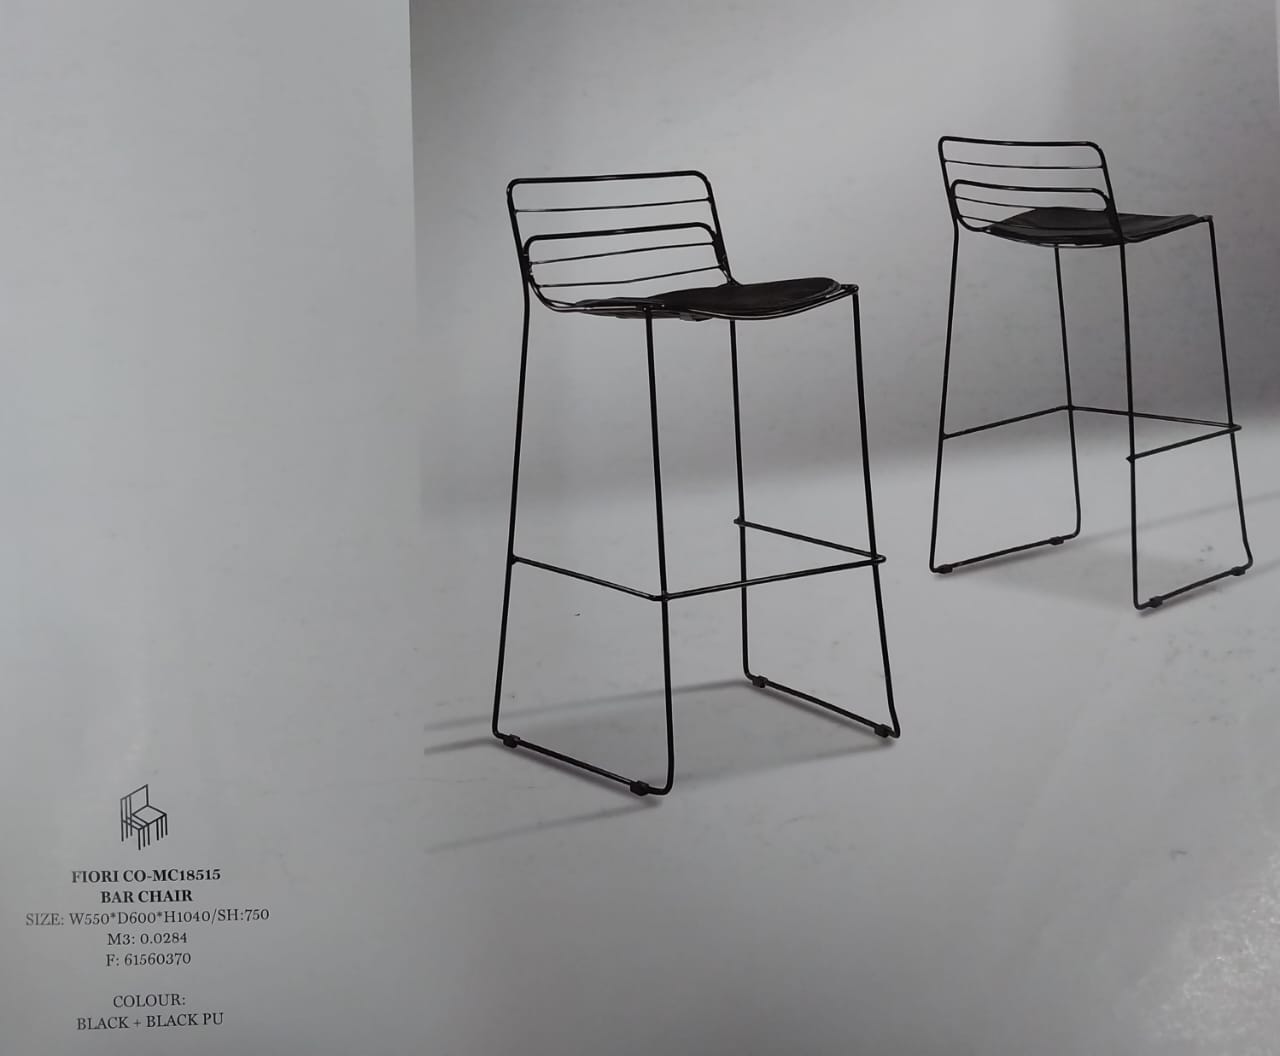 Product: Bar chair 007